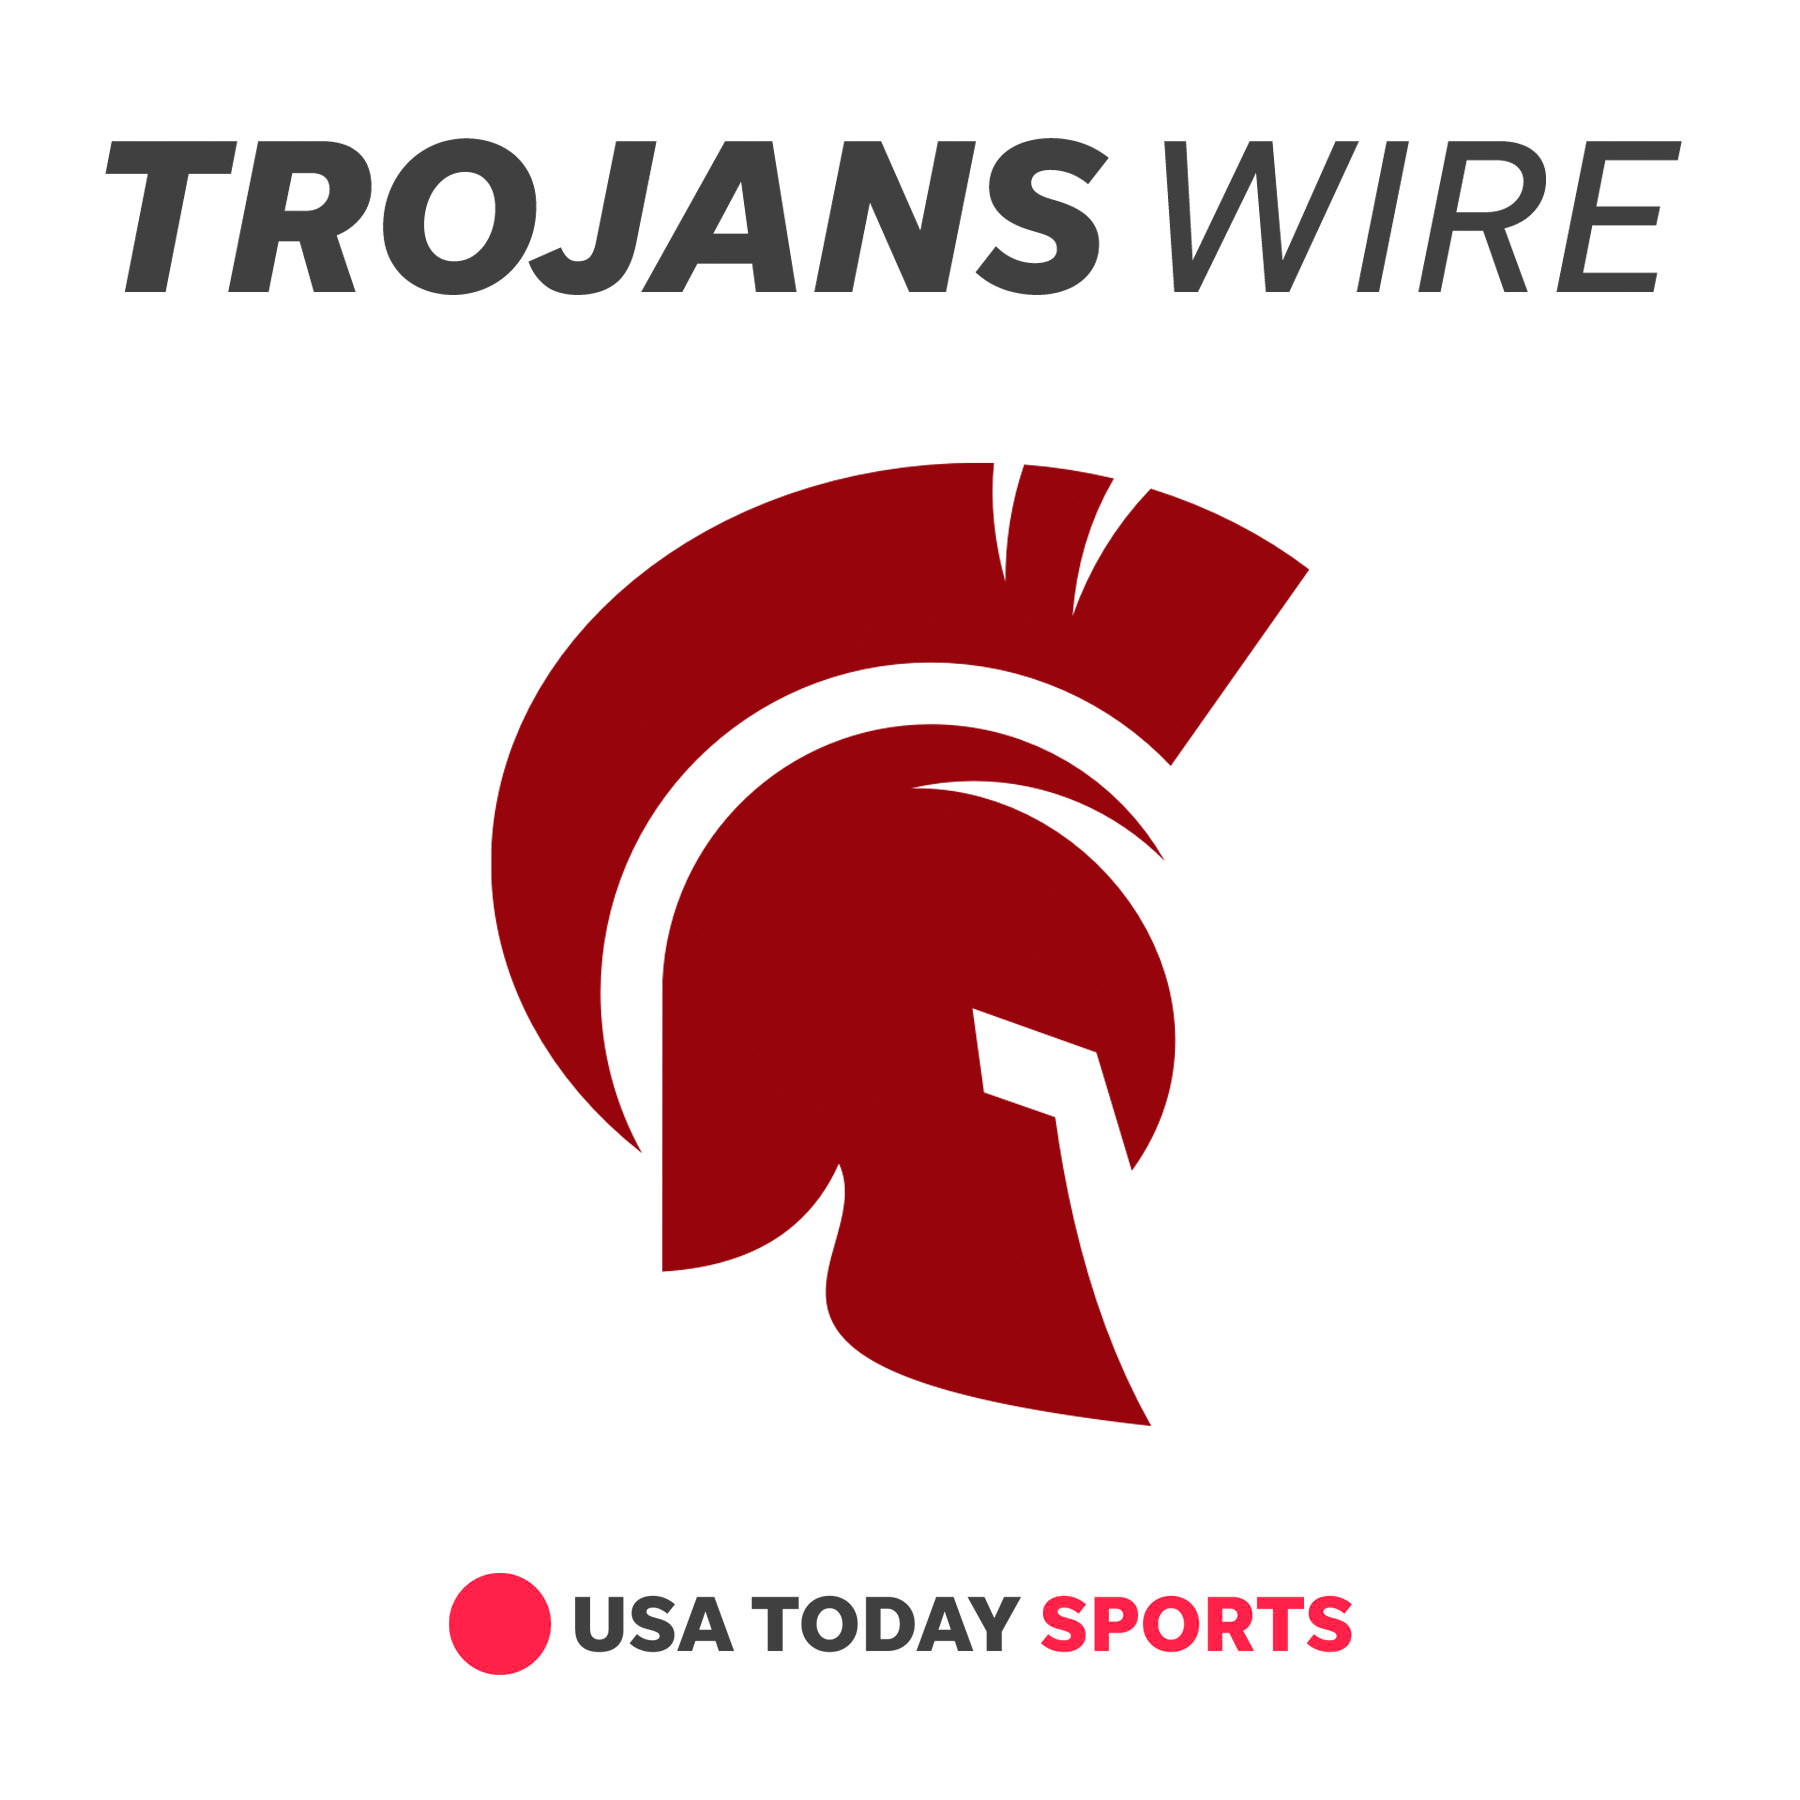 Trojans Wired Women's Hoops Report: February 20